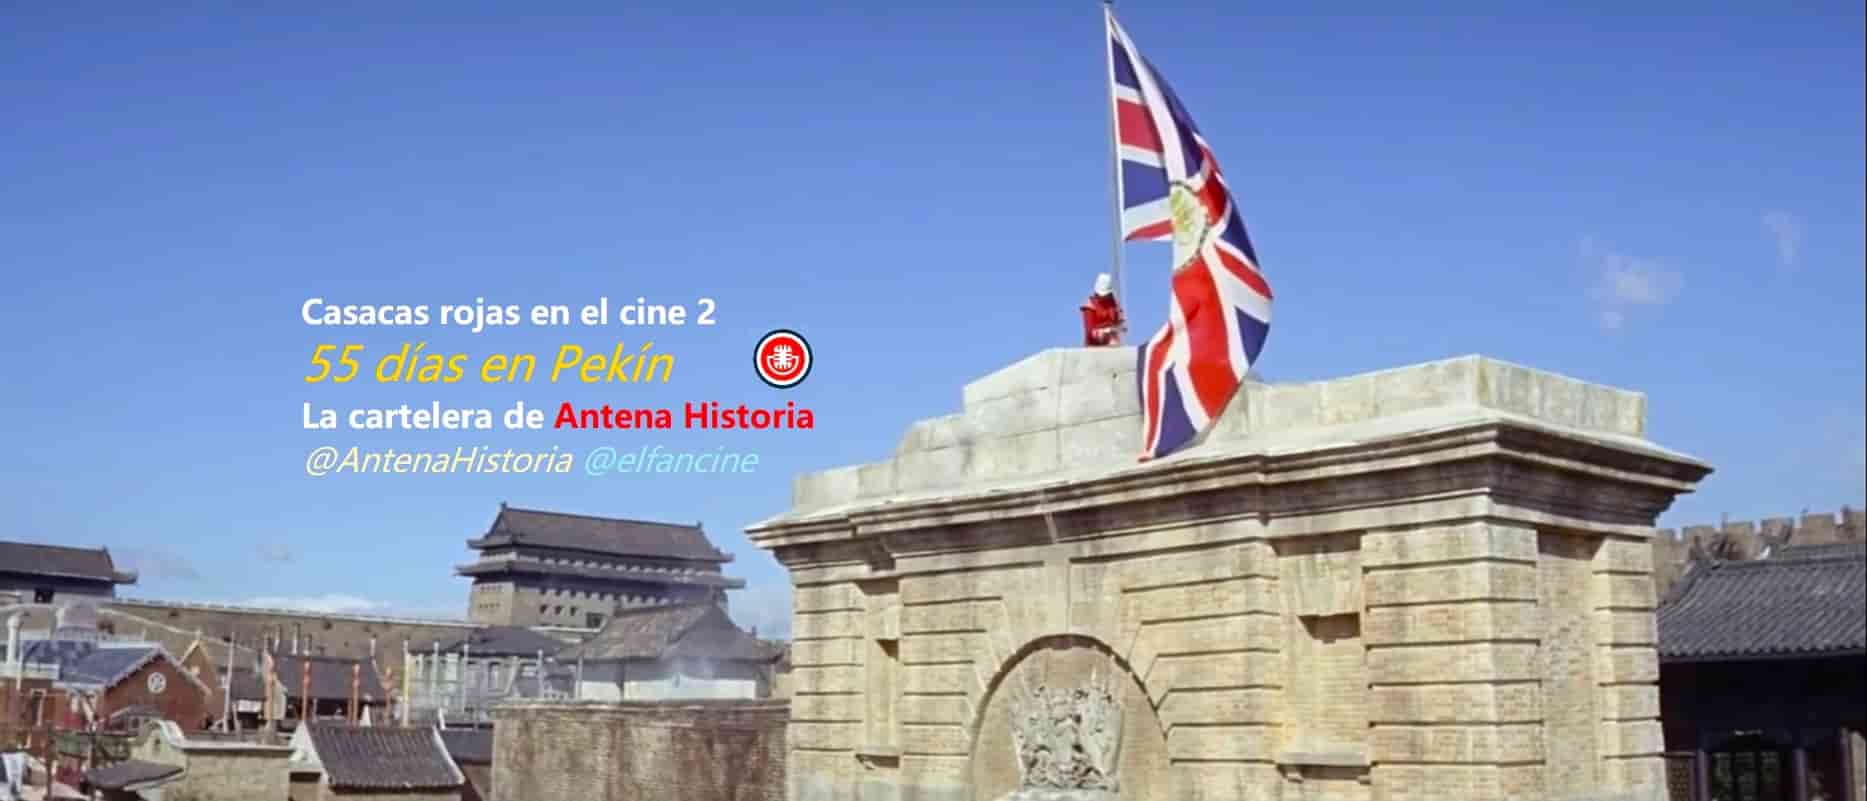 55 dias en Pekin - el fancine - Antena Historia - La cartelera de Antena Historia - Podcast de cine - Asia - China